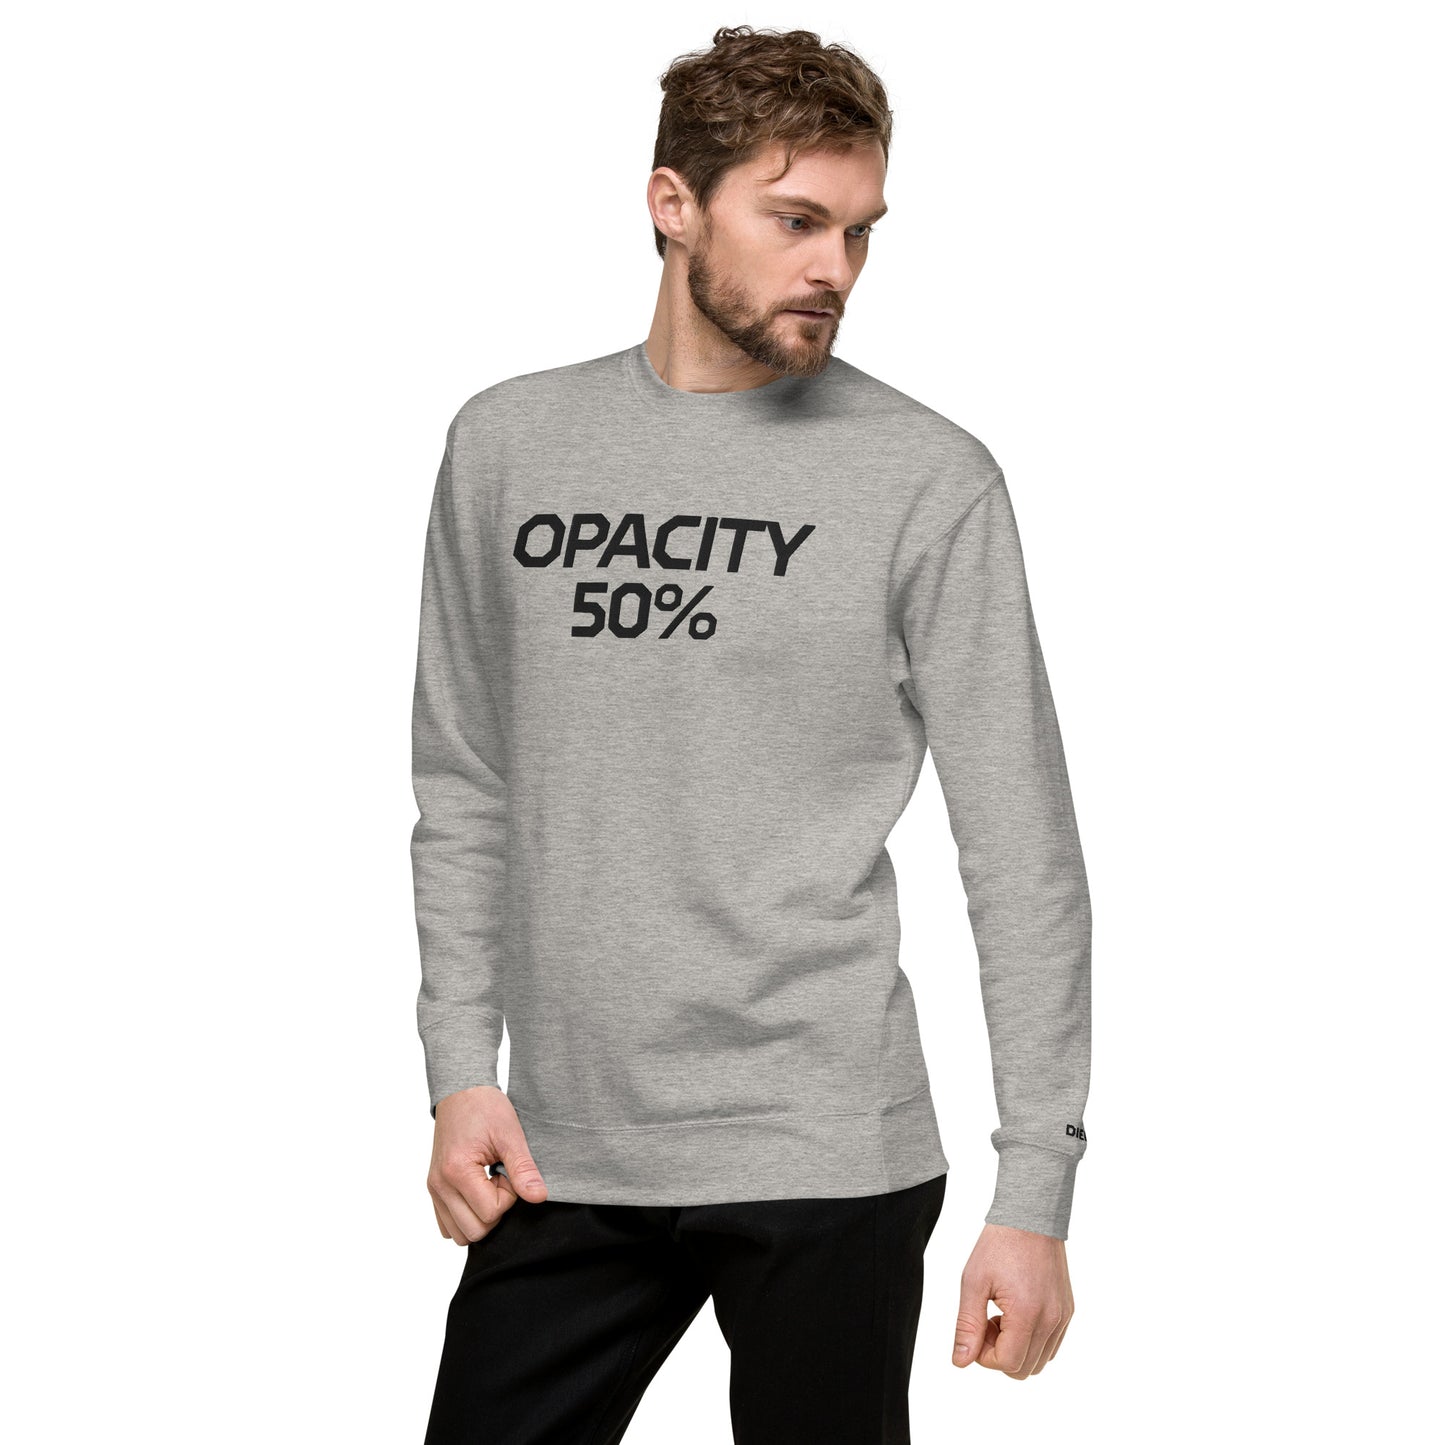 Opacity 50% Large Embroidery Unisex Premium Sweatshirt